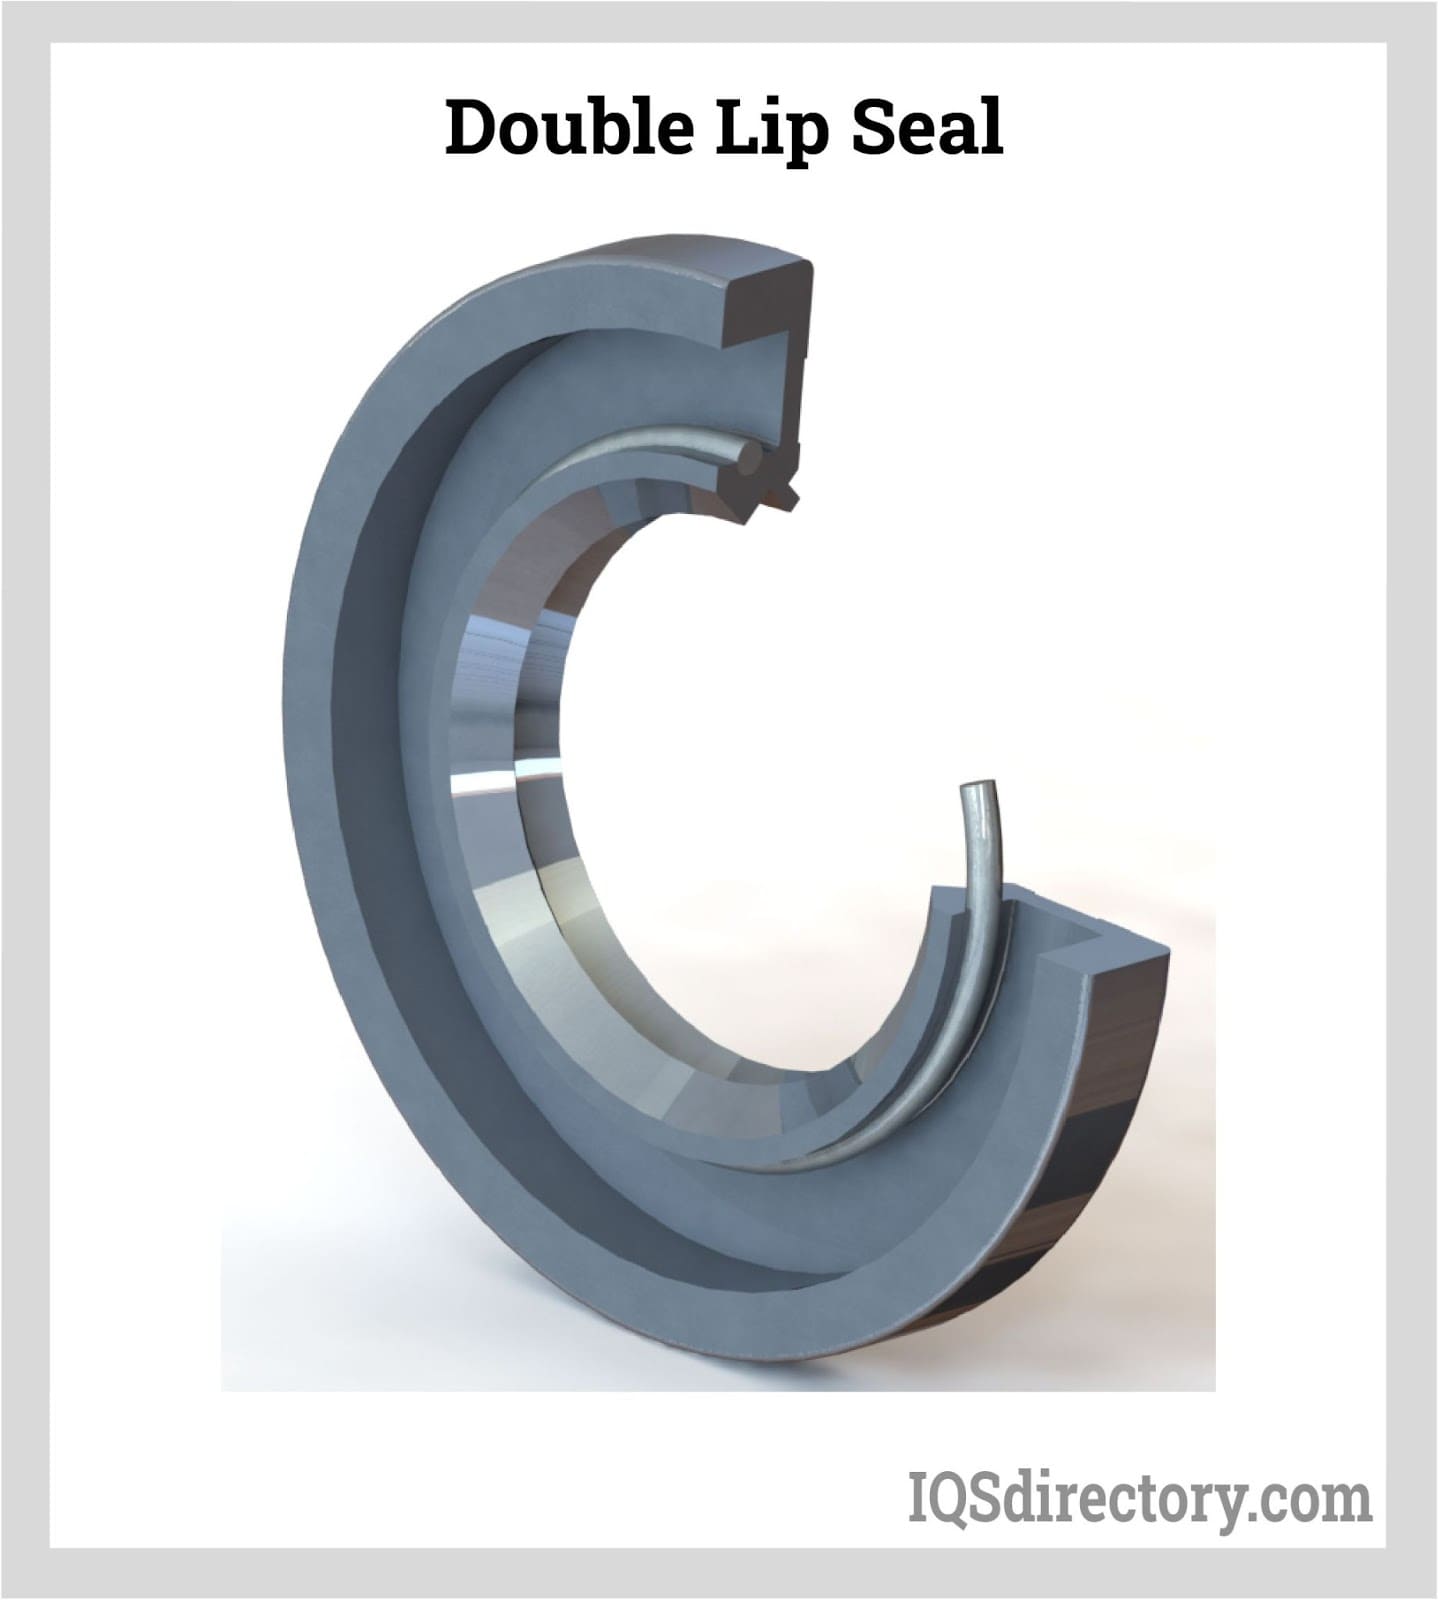 Double Lip Seal